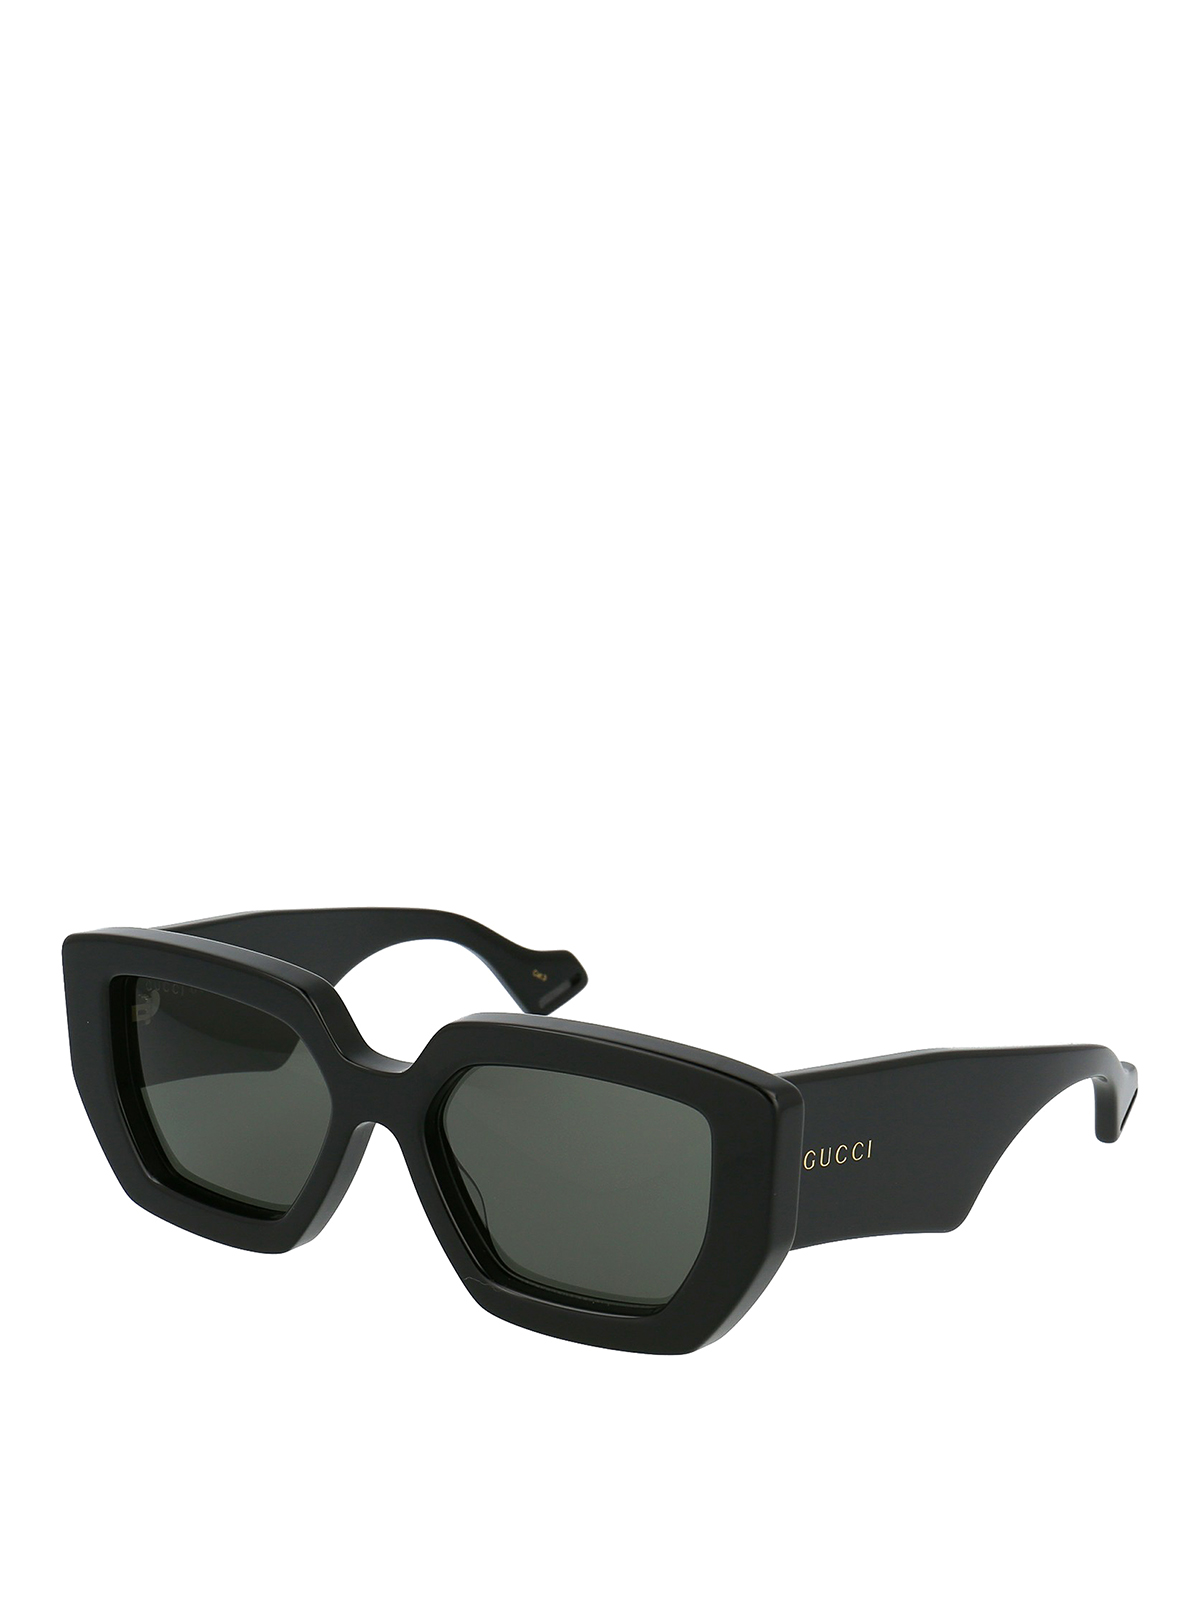 gucci black rectangular sunglasses